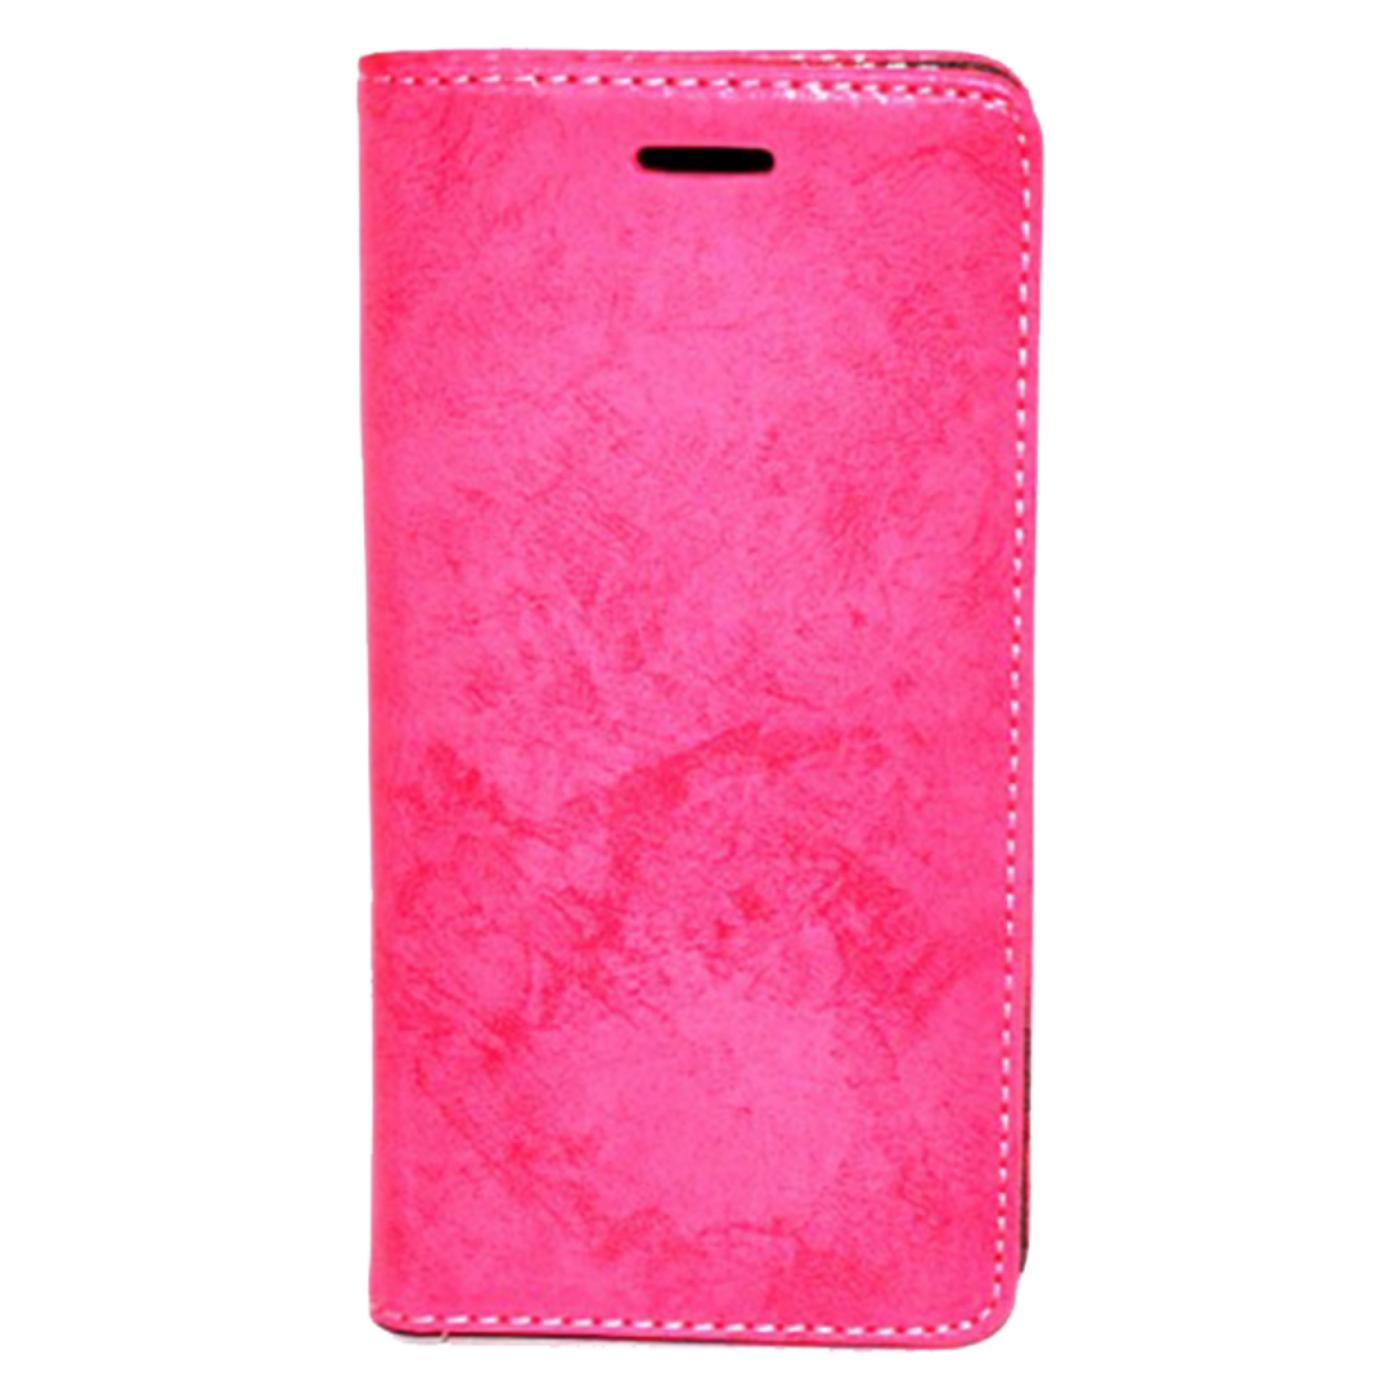 Futrola za mobitel Samsung A5, FLIP, pink